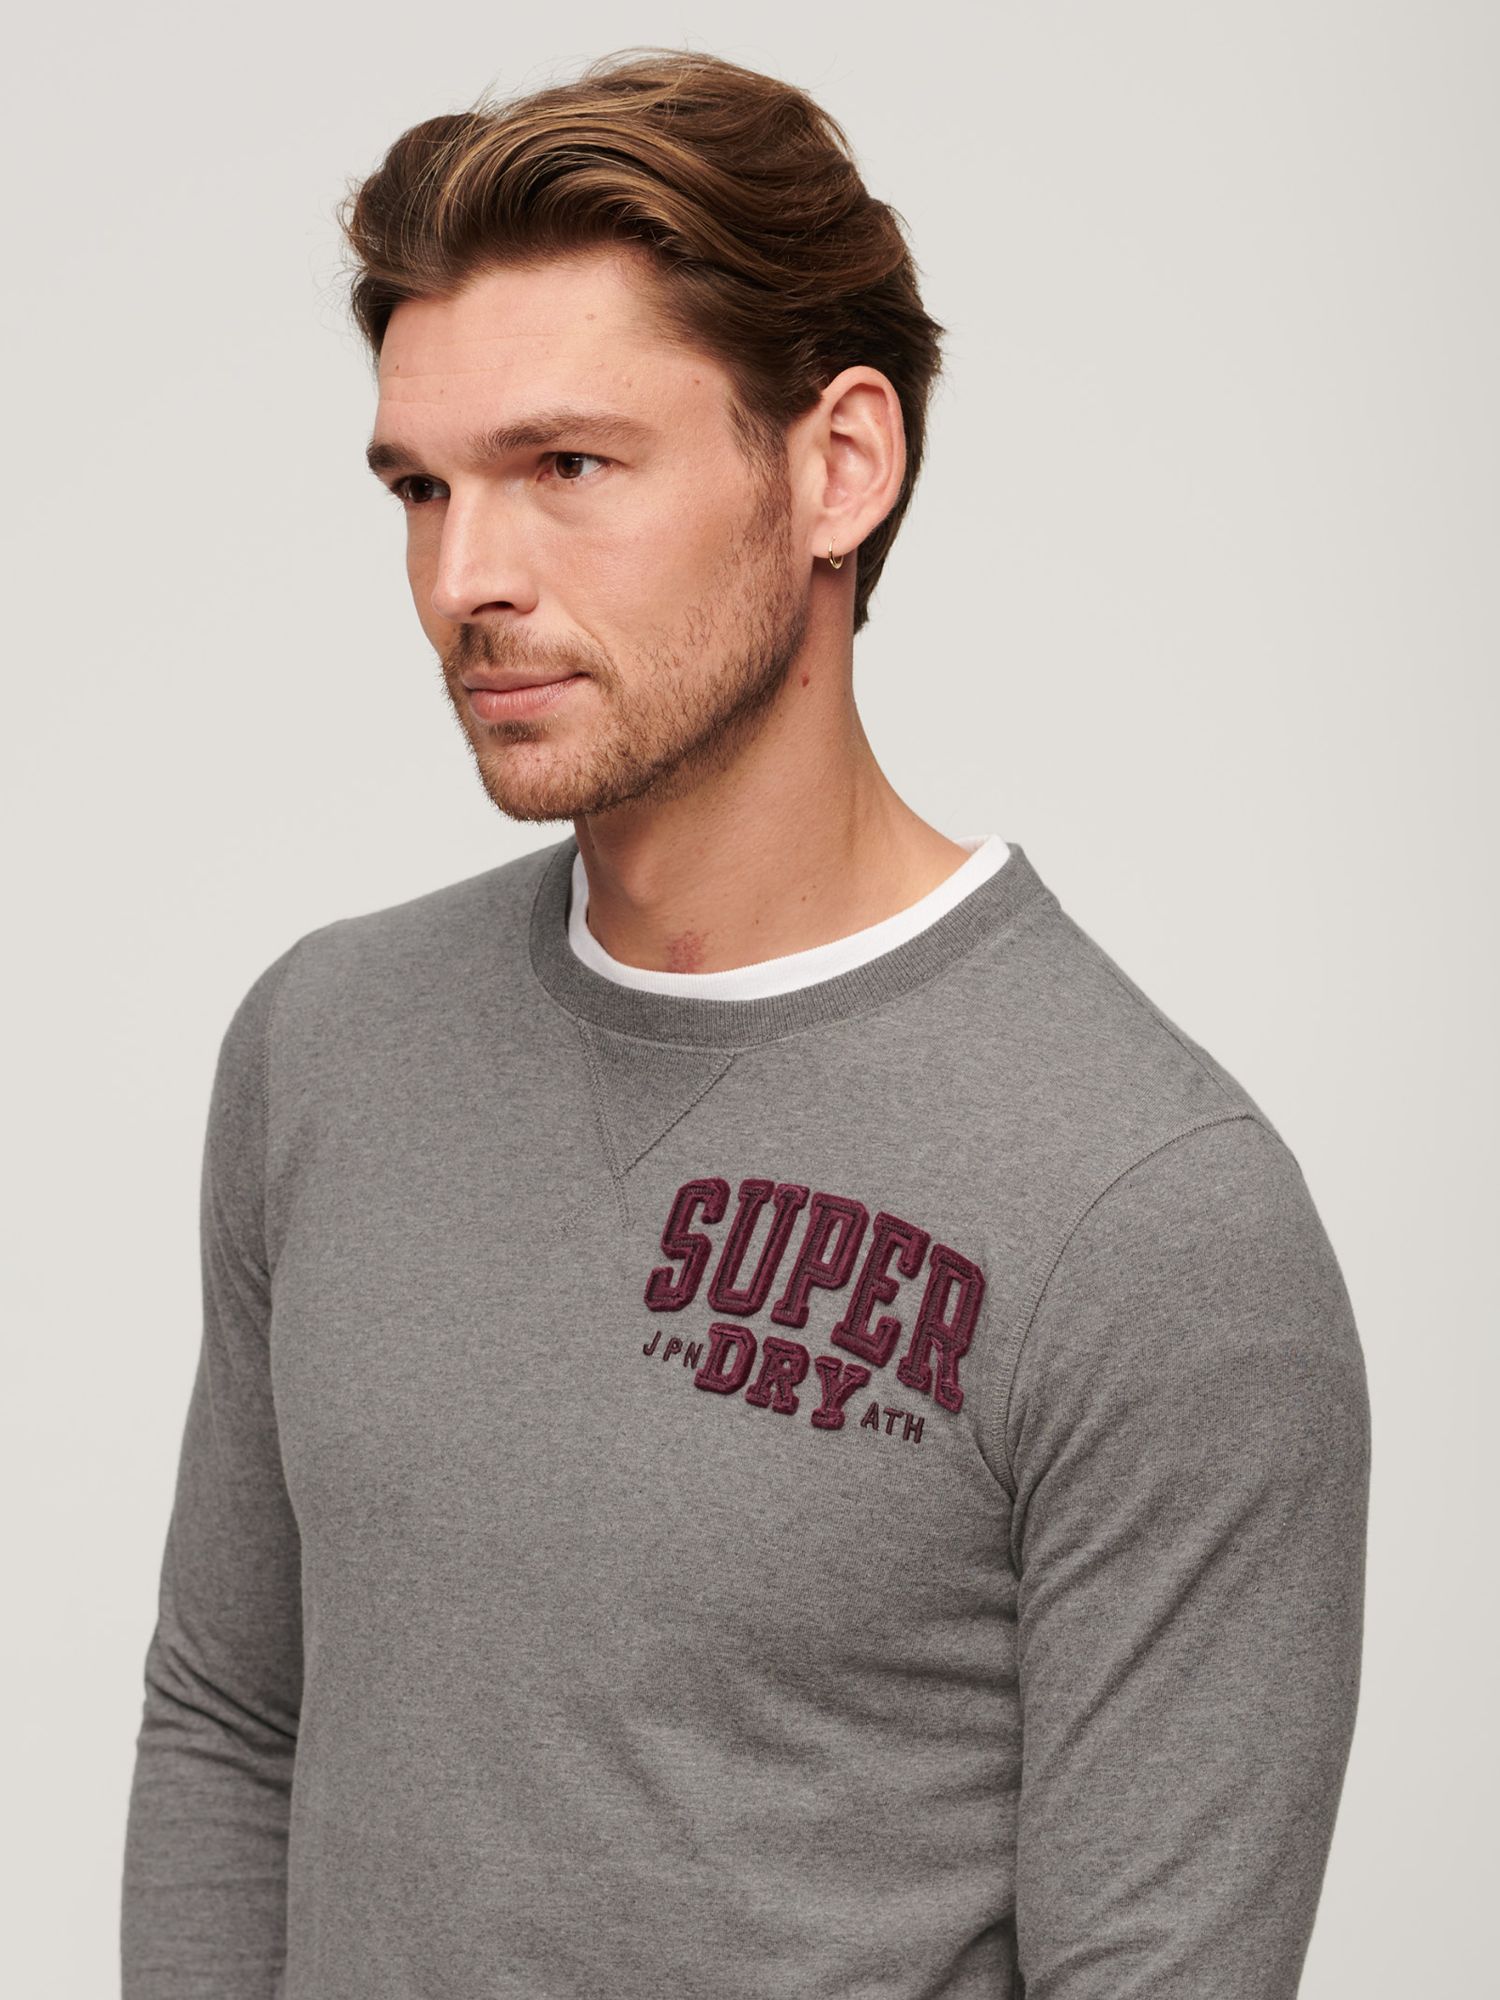 Buy Superdry Vintage Athletic Long Sleeve T-Shirt, Grey Online at johnlewis.com